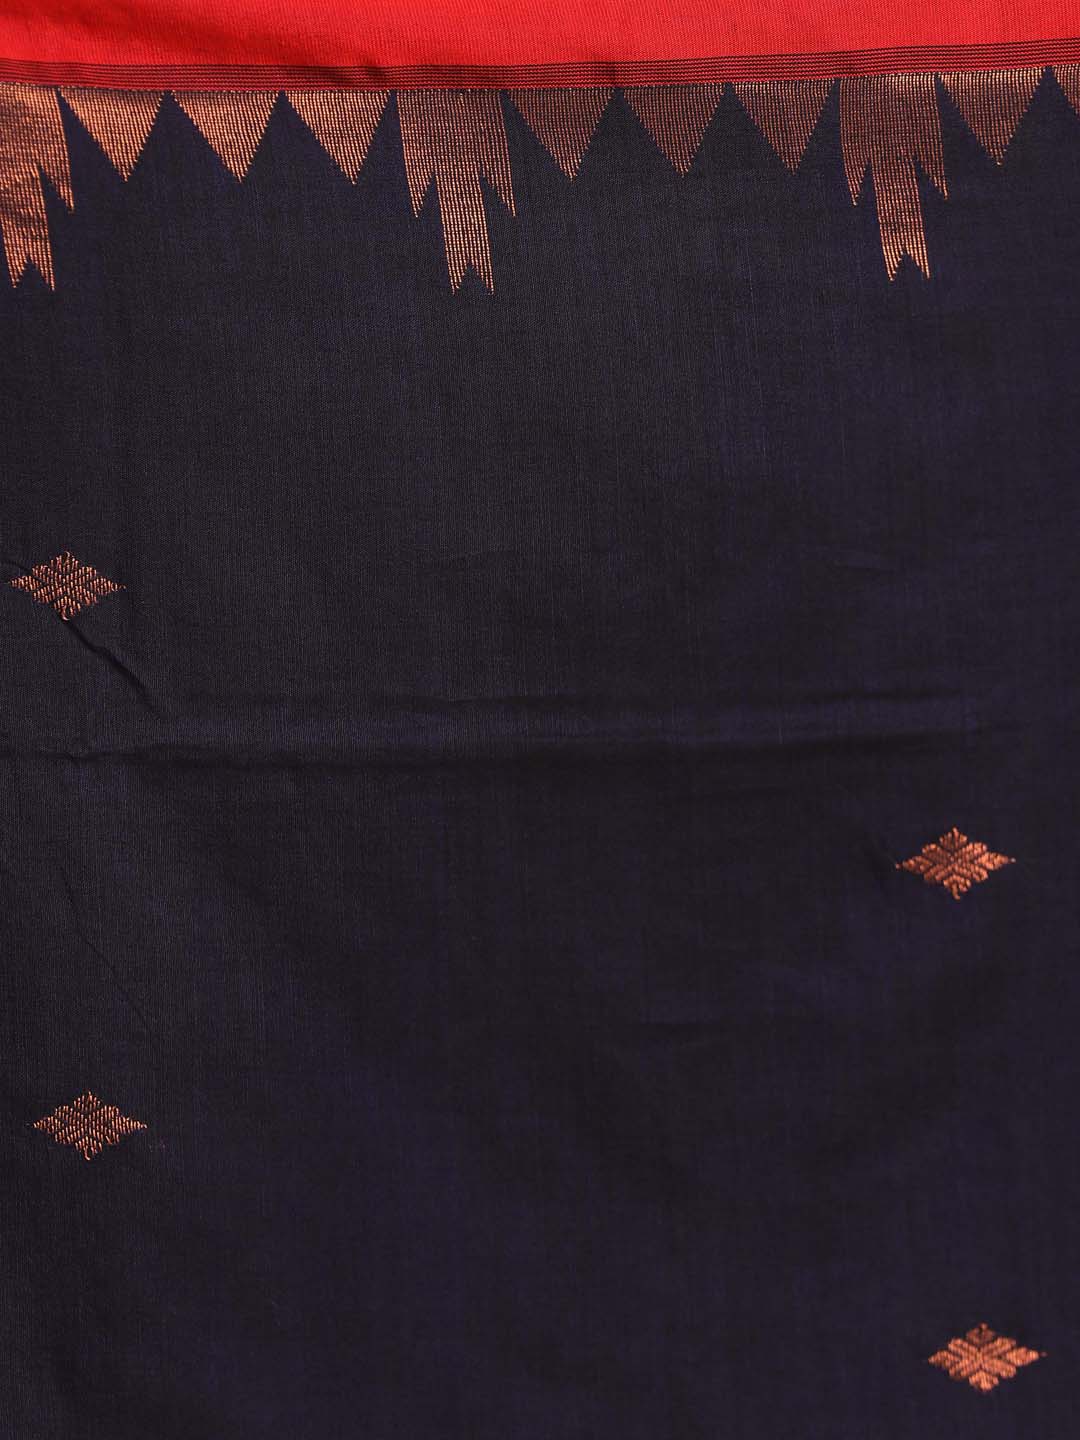 Indethnic Navy Blue Pure Cotton Ethnic Motifs Design Jamdani - Saree Detail View